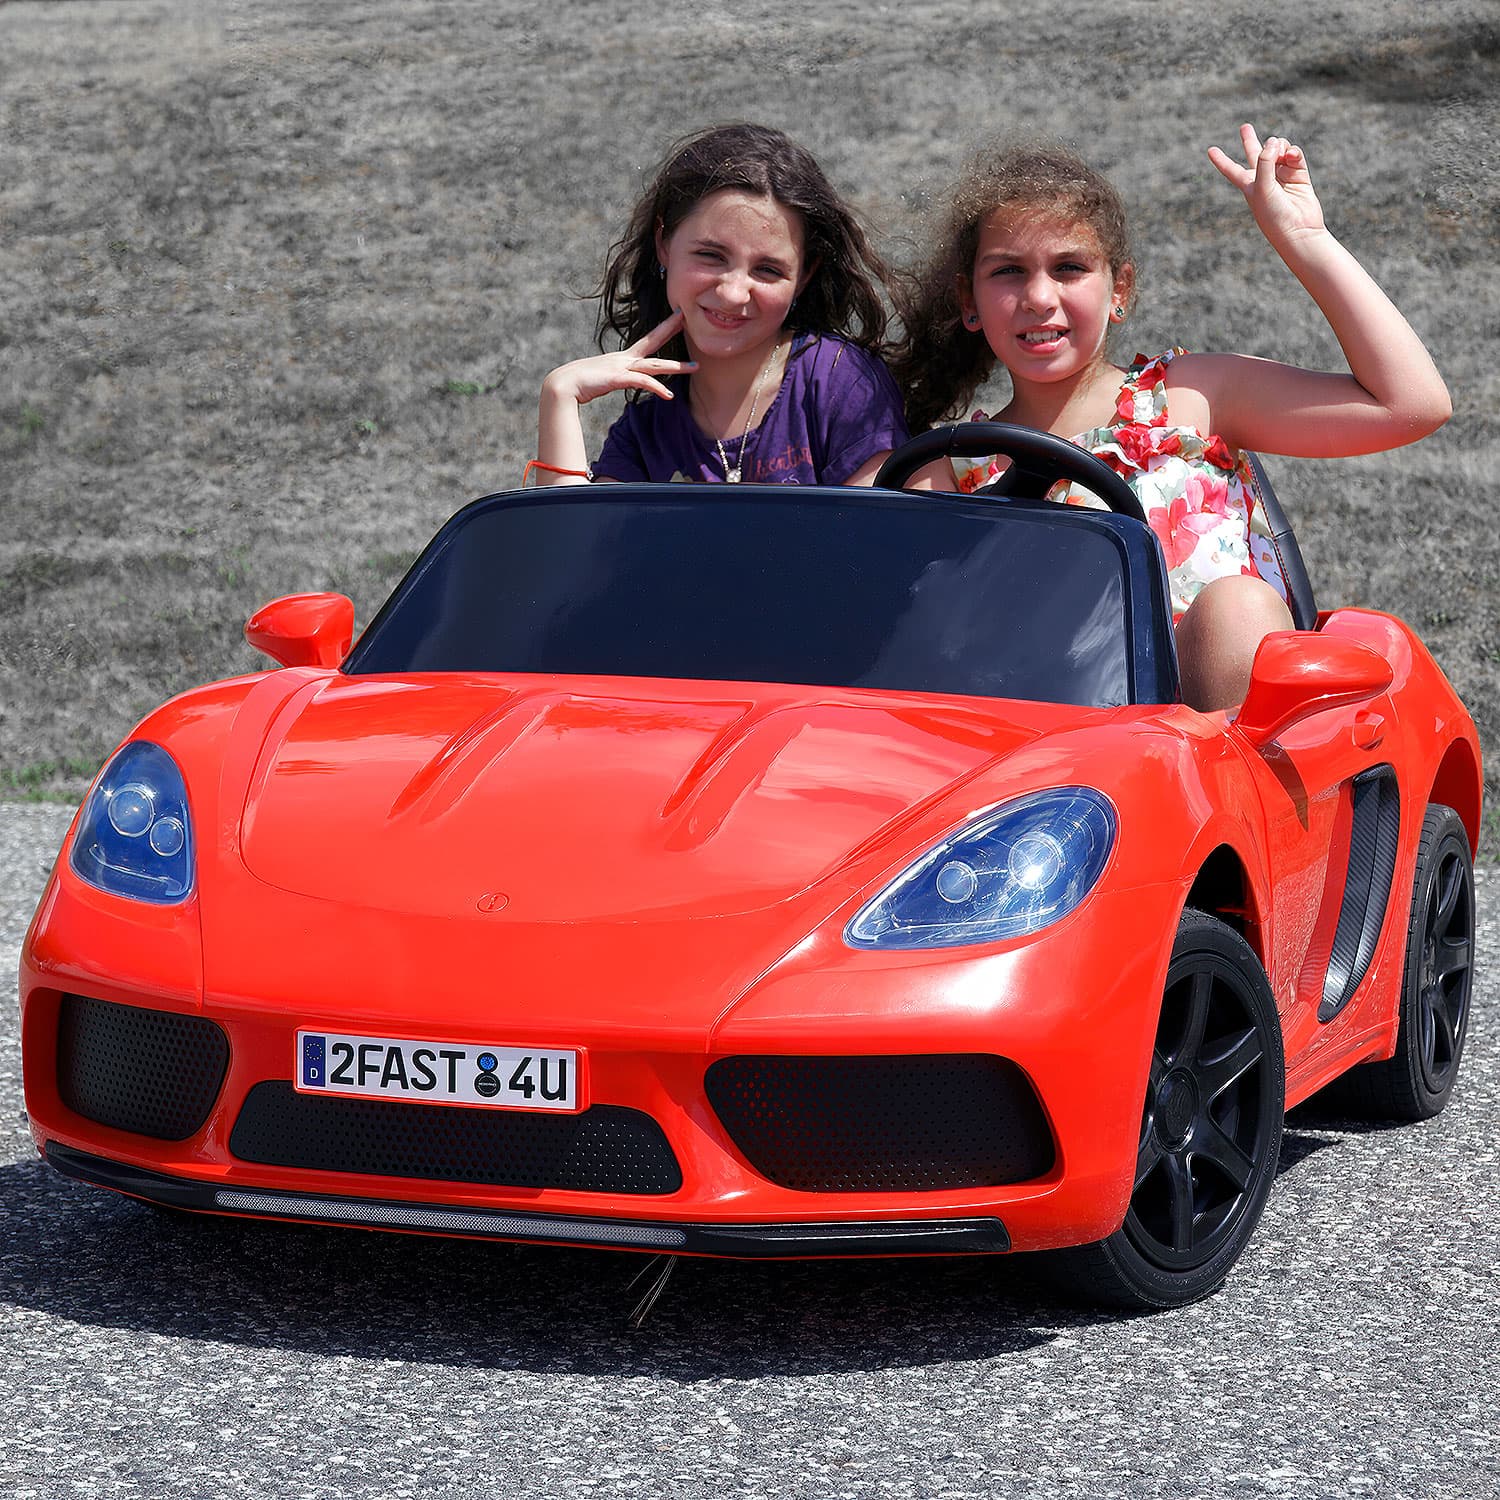 Megastar Kids XXL 24V Electric Ride-on Licensed Porsche with RC 2 seats